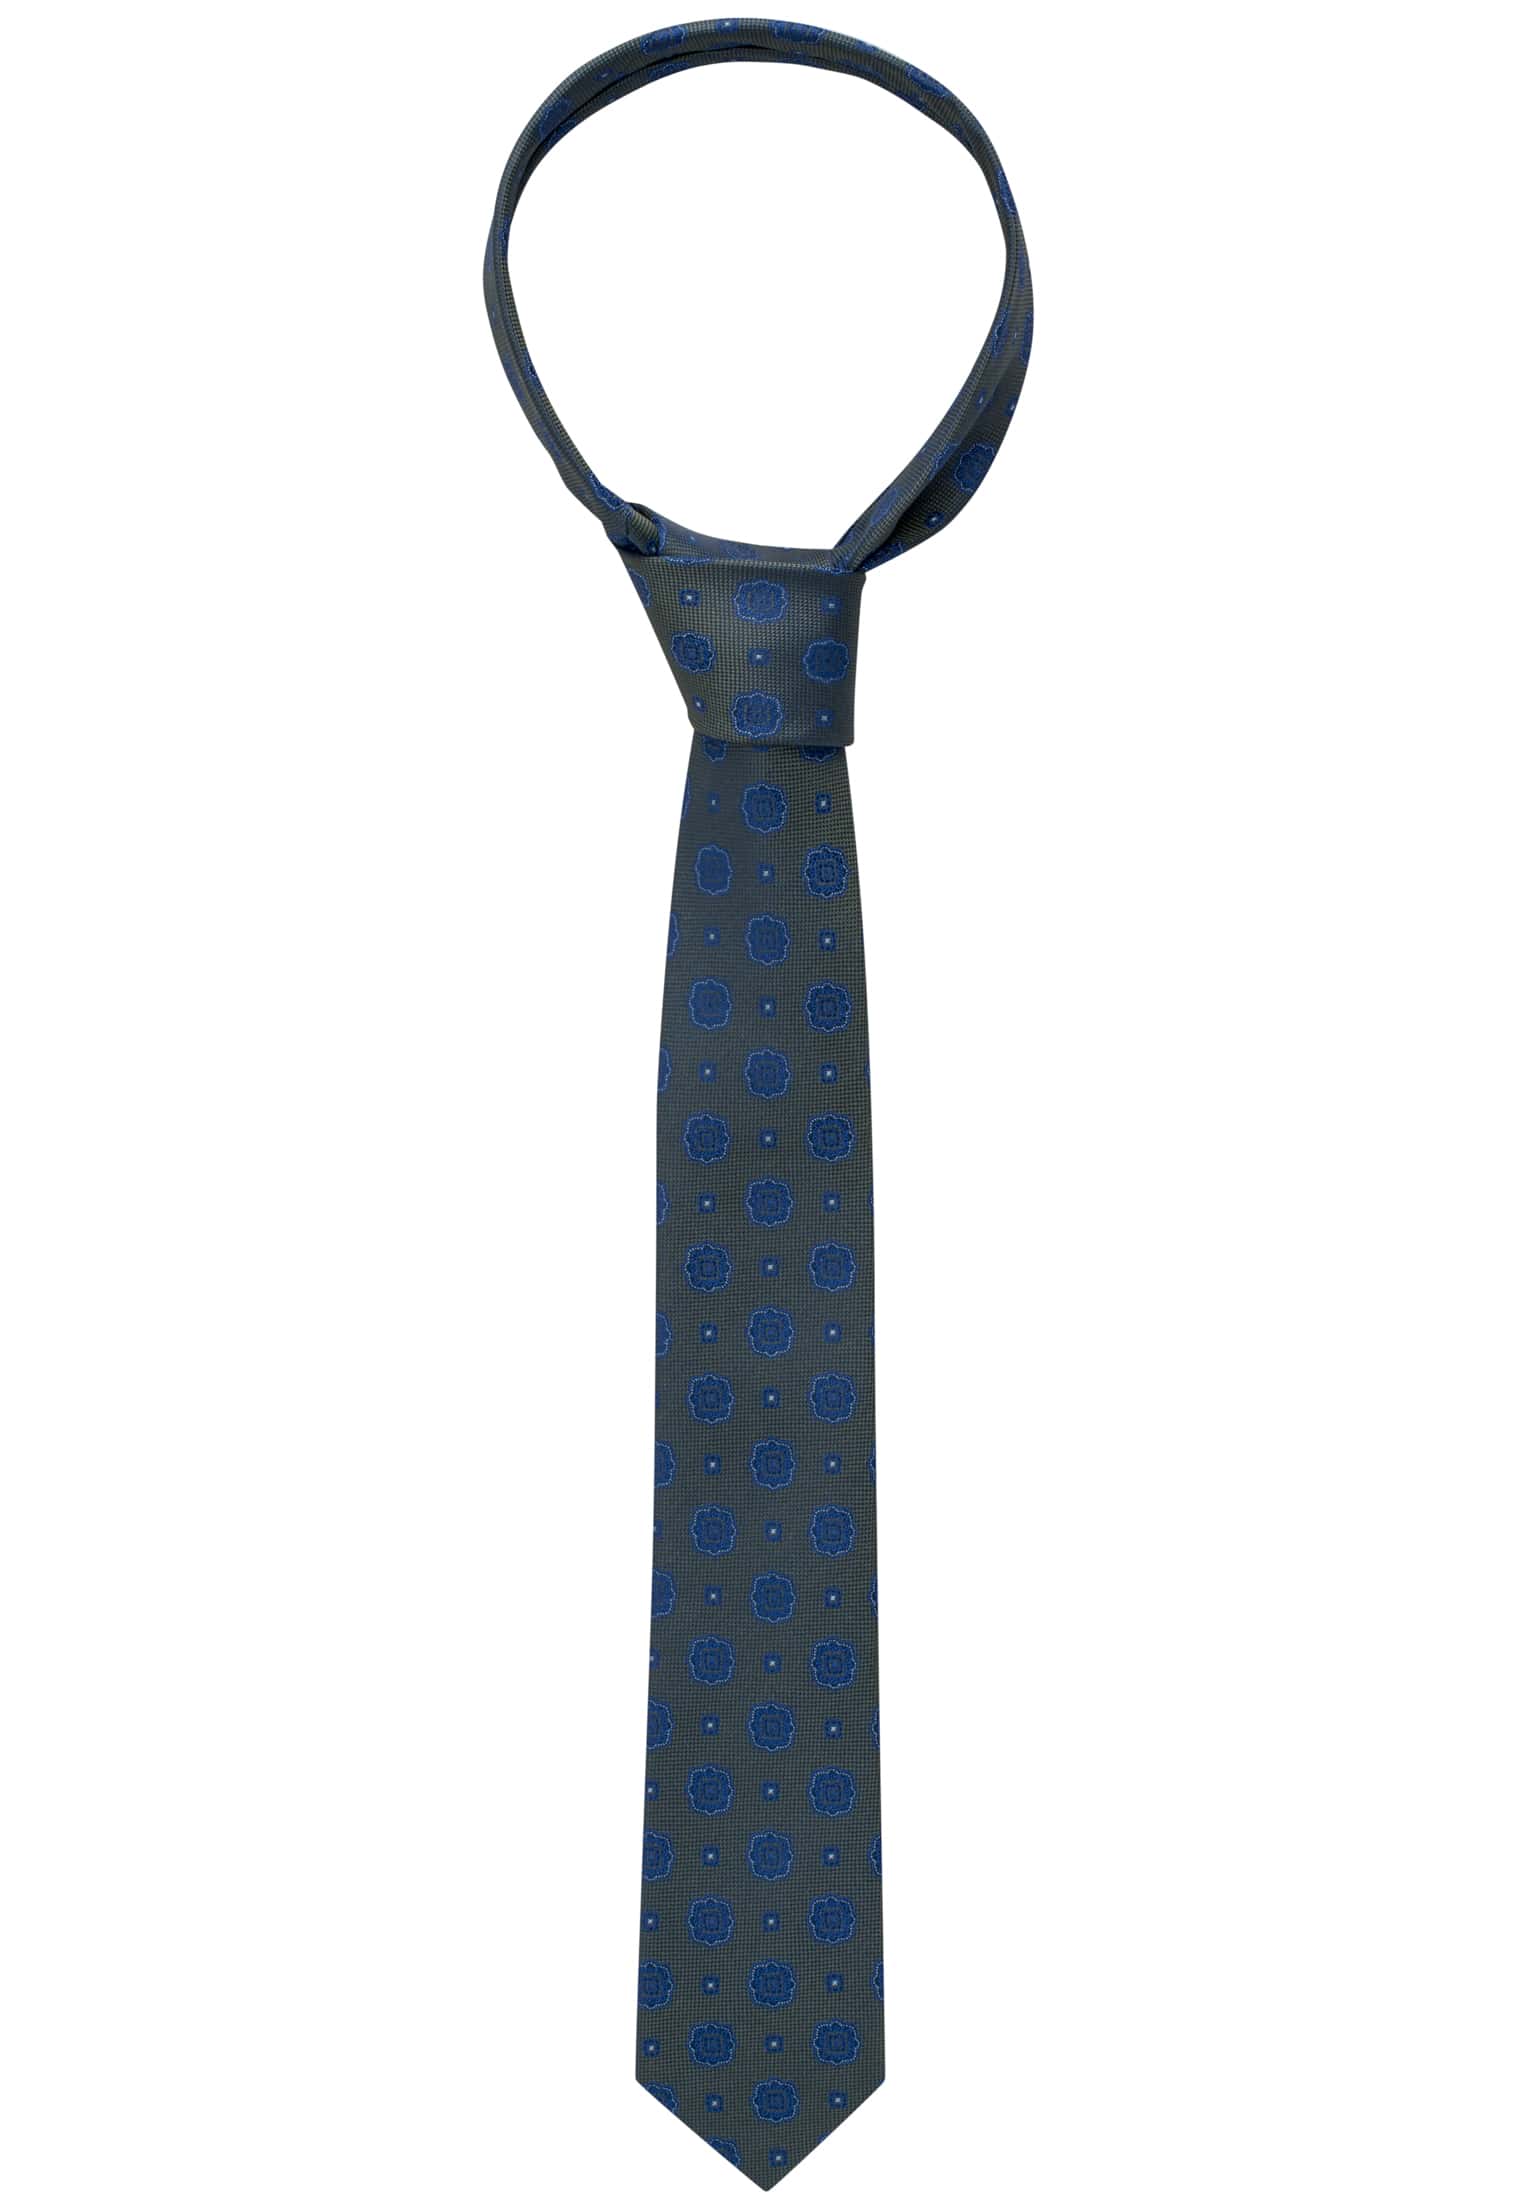 Krawatte in blau/grün gemustert | blau/grün | 142 | 1AC00183-81-48-142